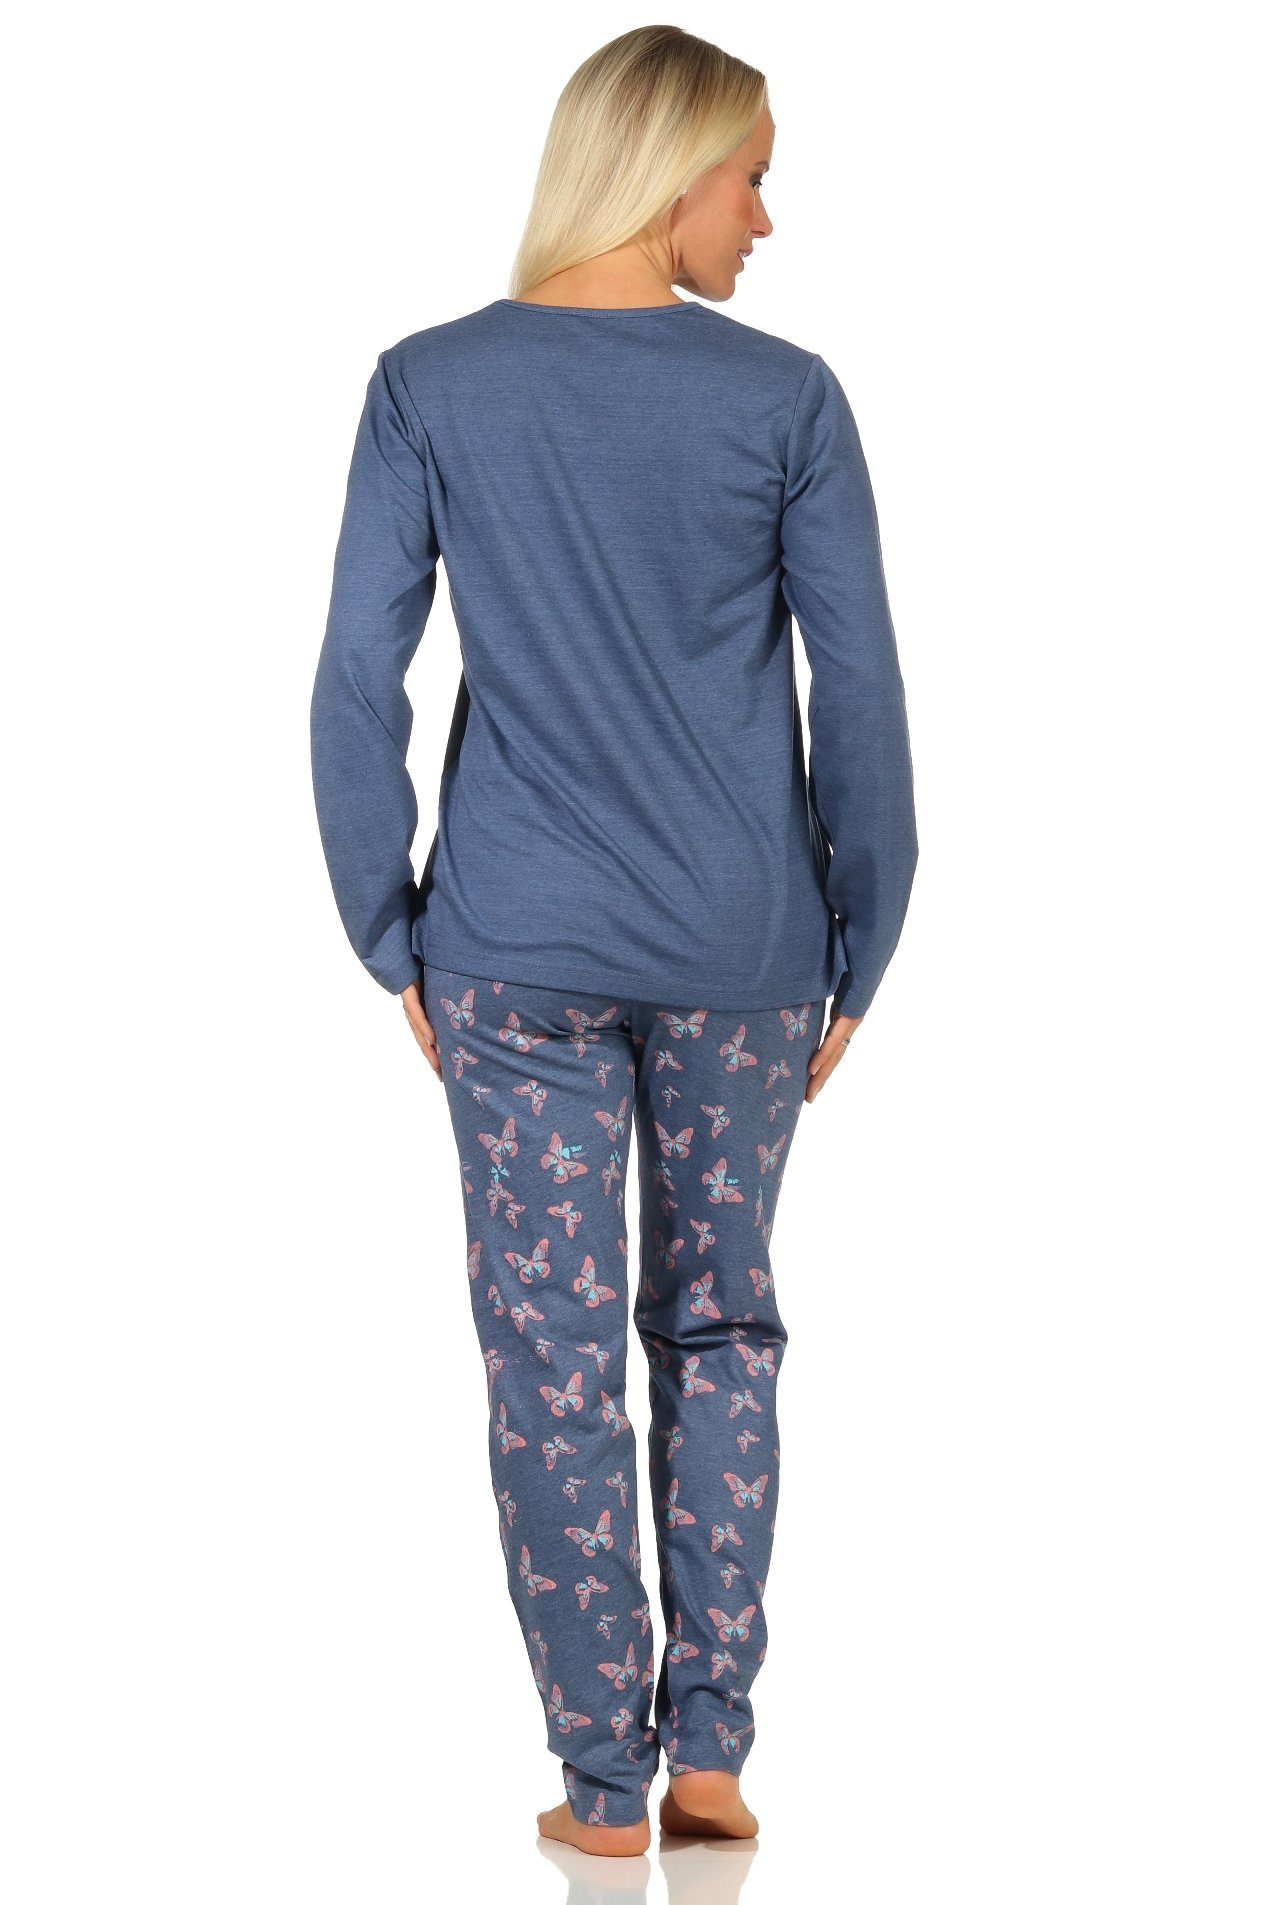 Schmetterlingsmotiv Normann by mit Damen - 10 811 blau 122 Schlafanzug langarm Pyjama RELAX